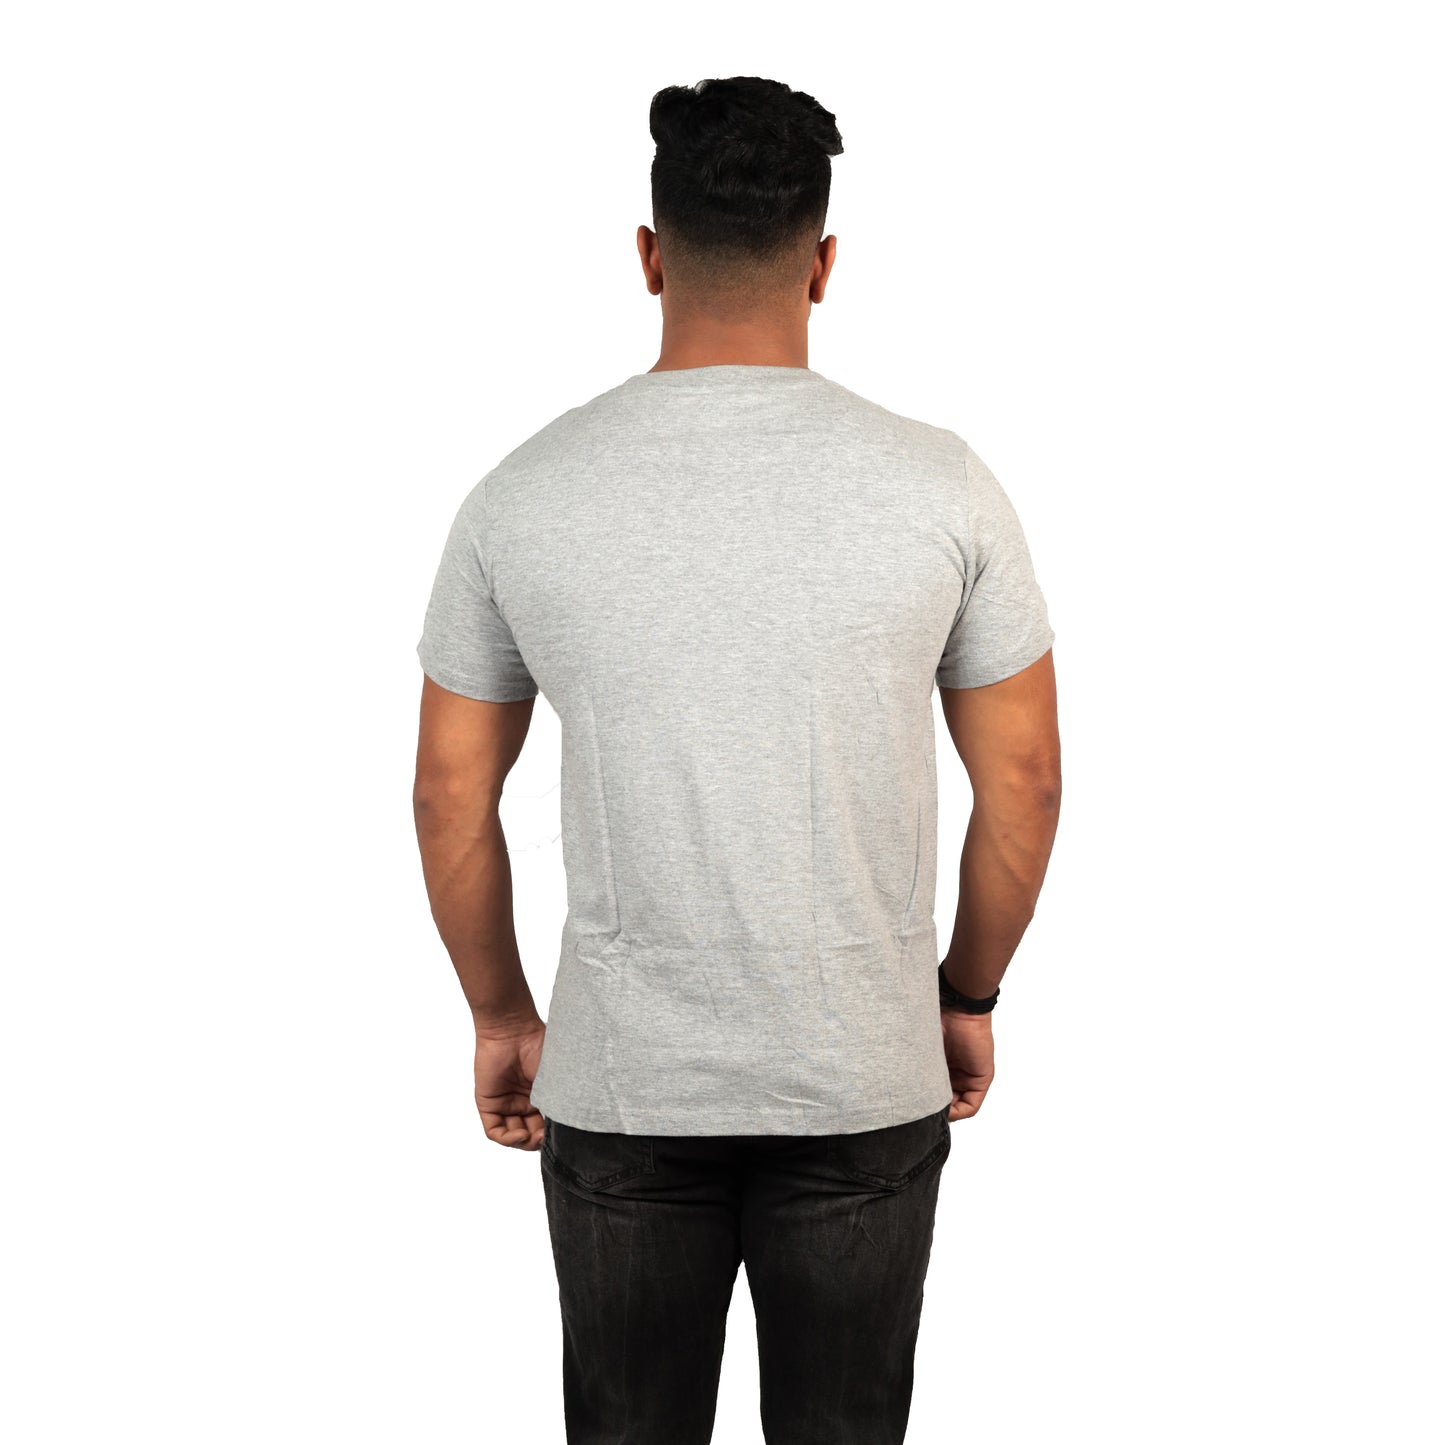 Viking Printed T-shirt In Grey Color For Men